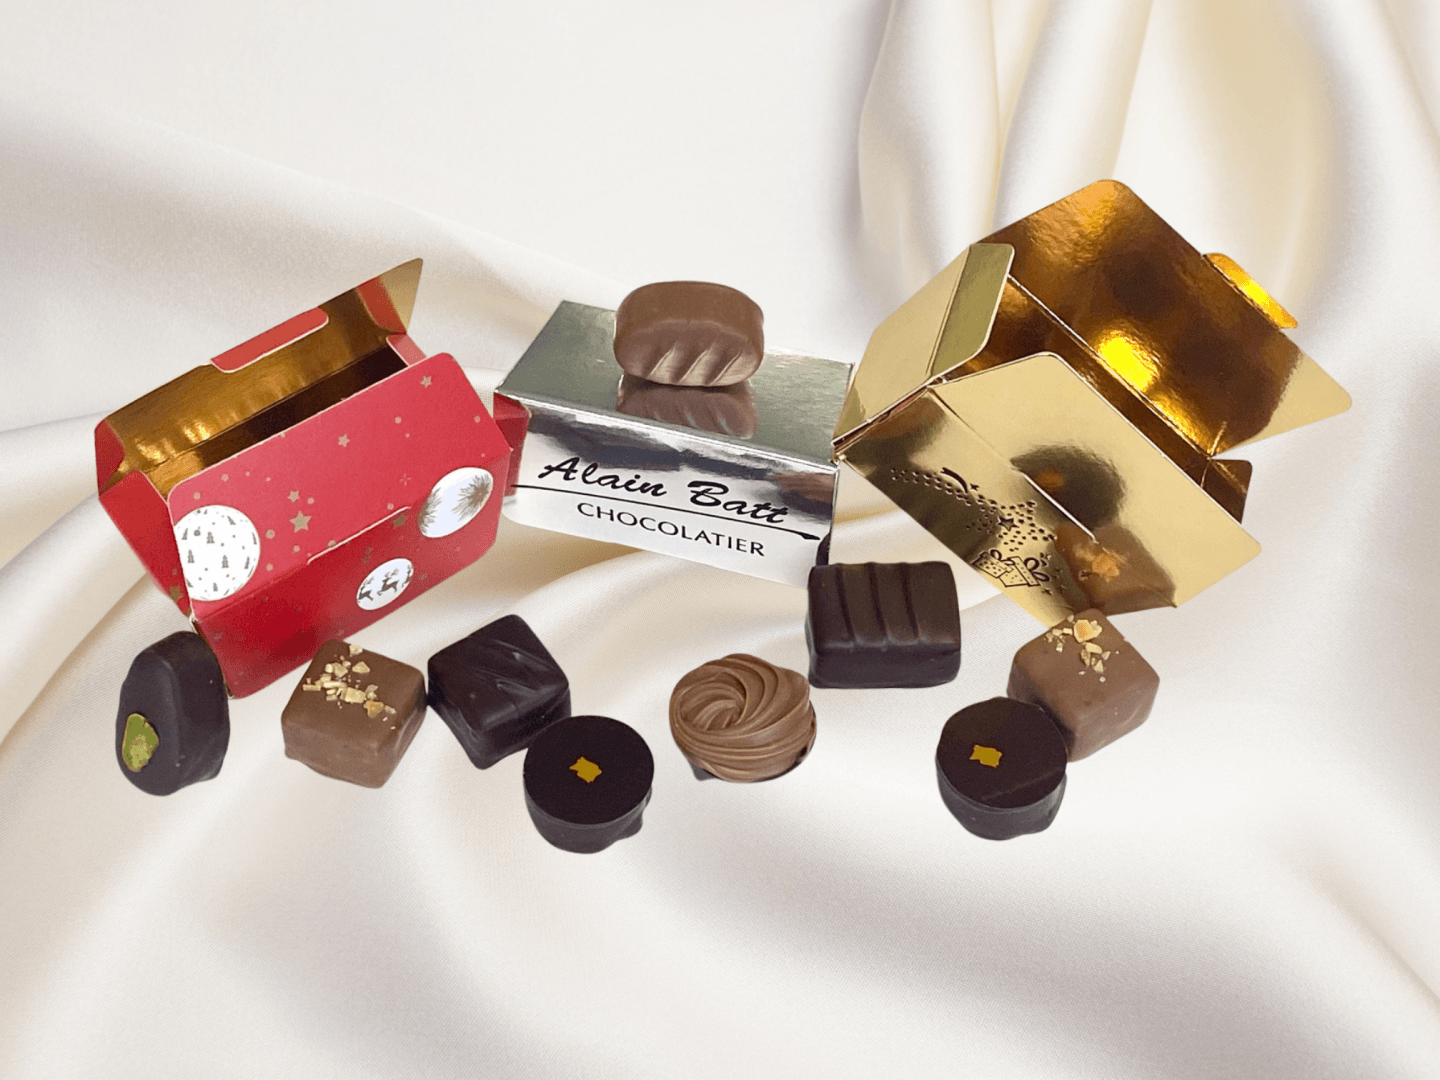 Mini ballotin 6 chocolats - Spécial fêtes de noël - Chocolats